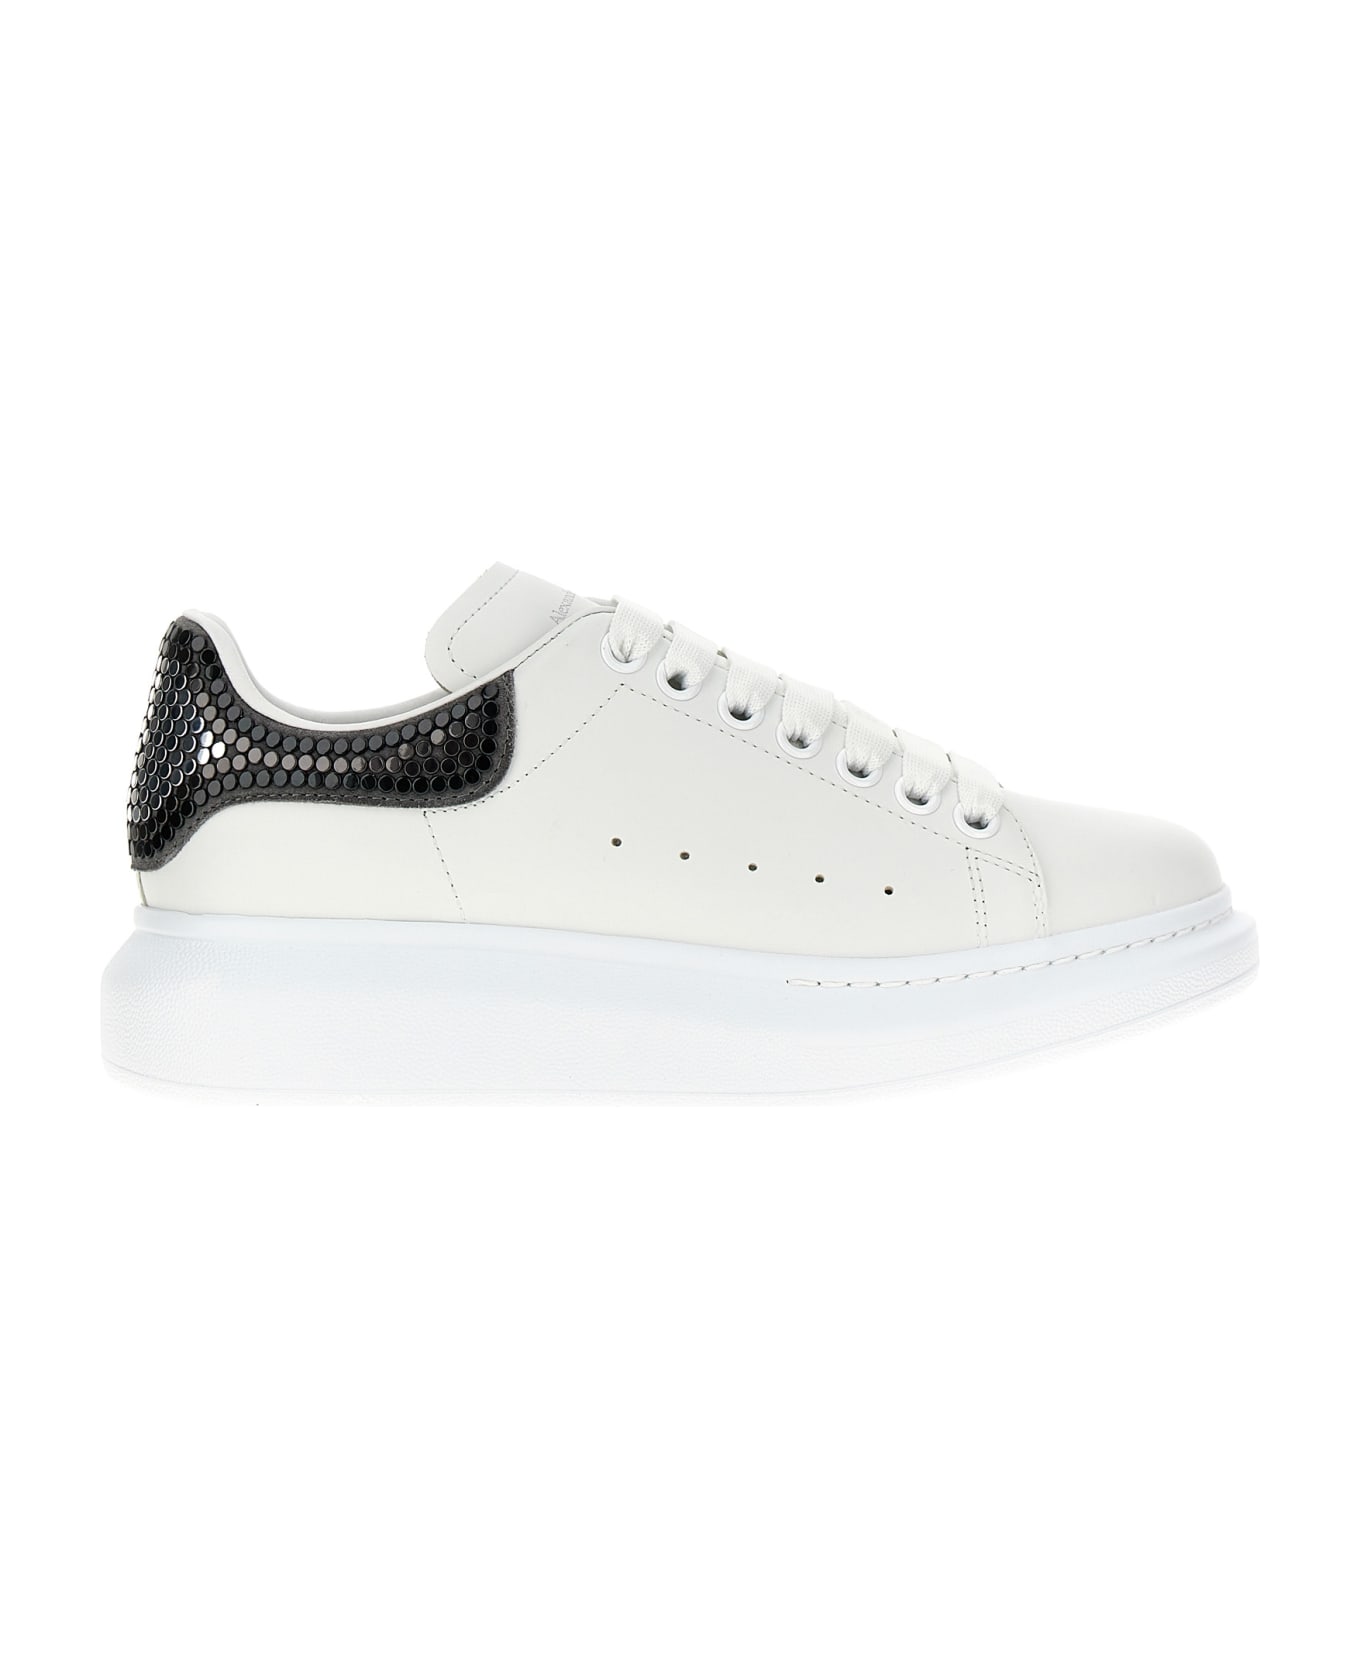 Alexander McQueen Larry Sneakers - White/Black